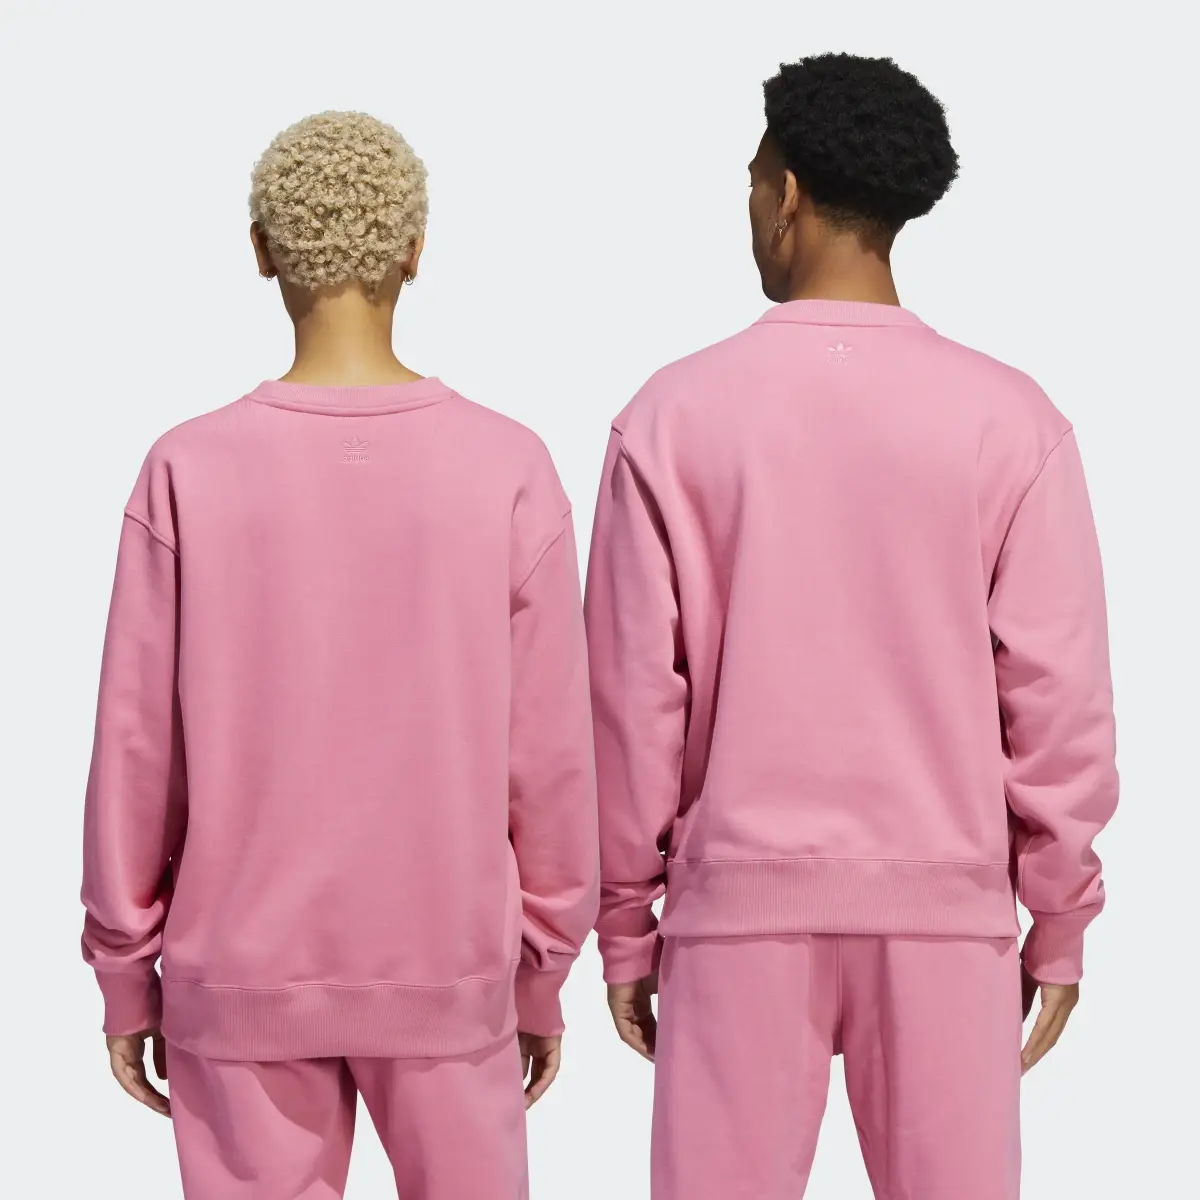 Adidas Pharrell Williams Basics Crew Sweatshirt (Gender Neutral). 2